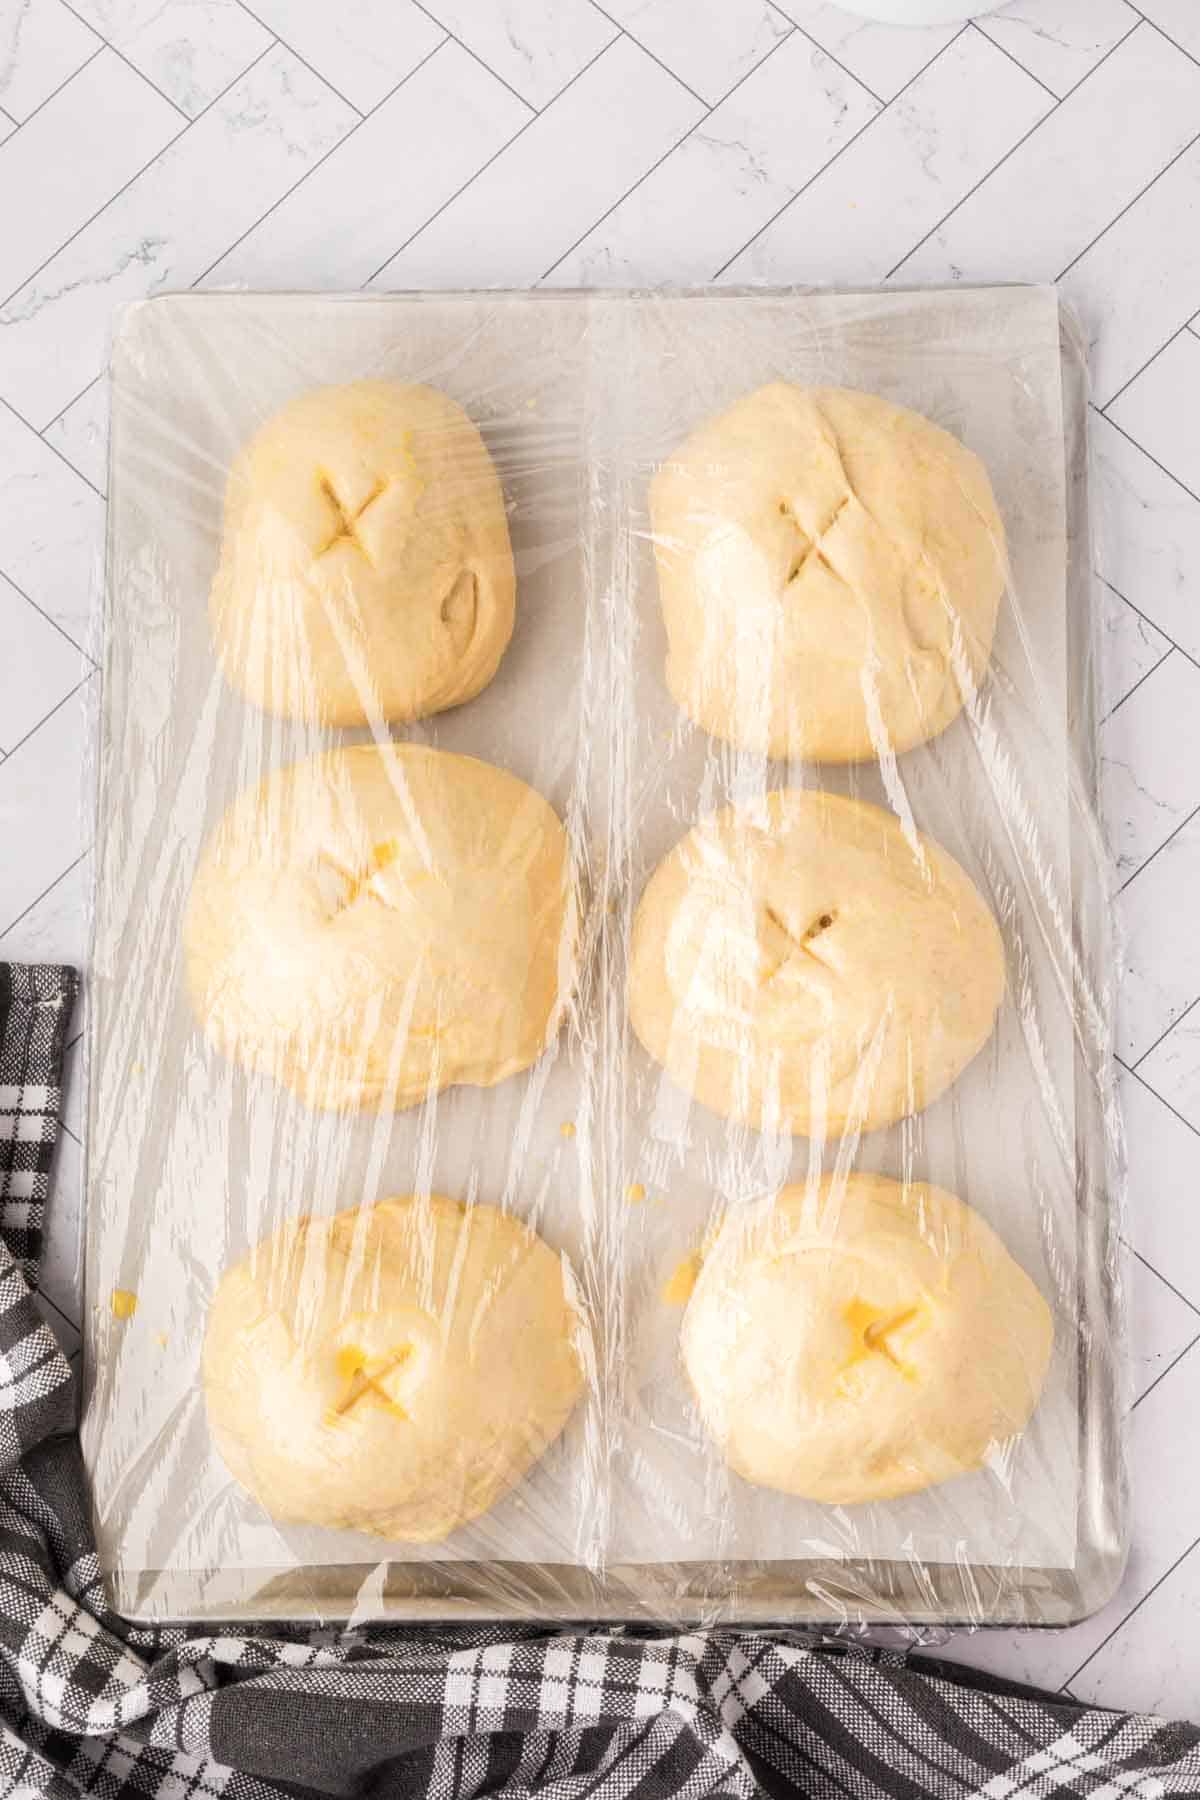 Covered dough balls on a baking sheet